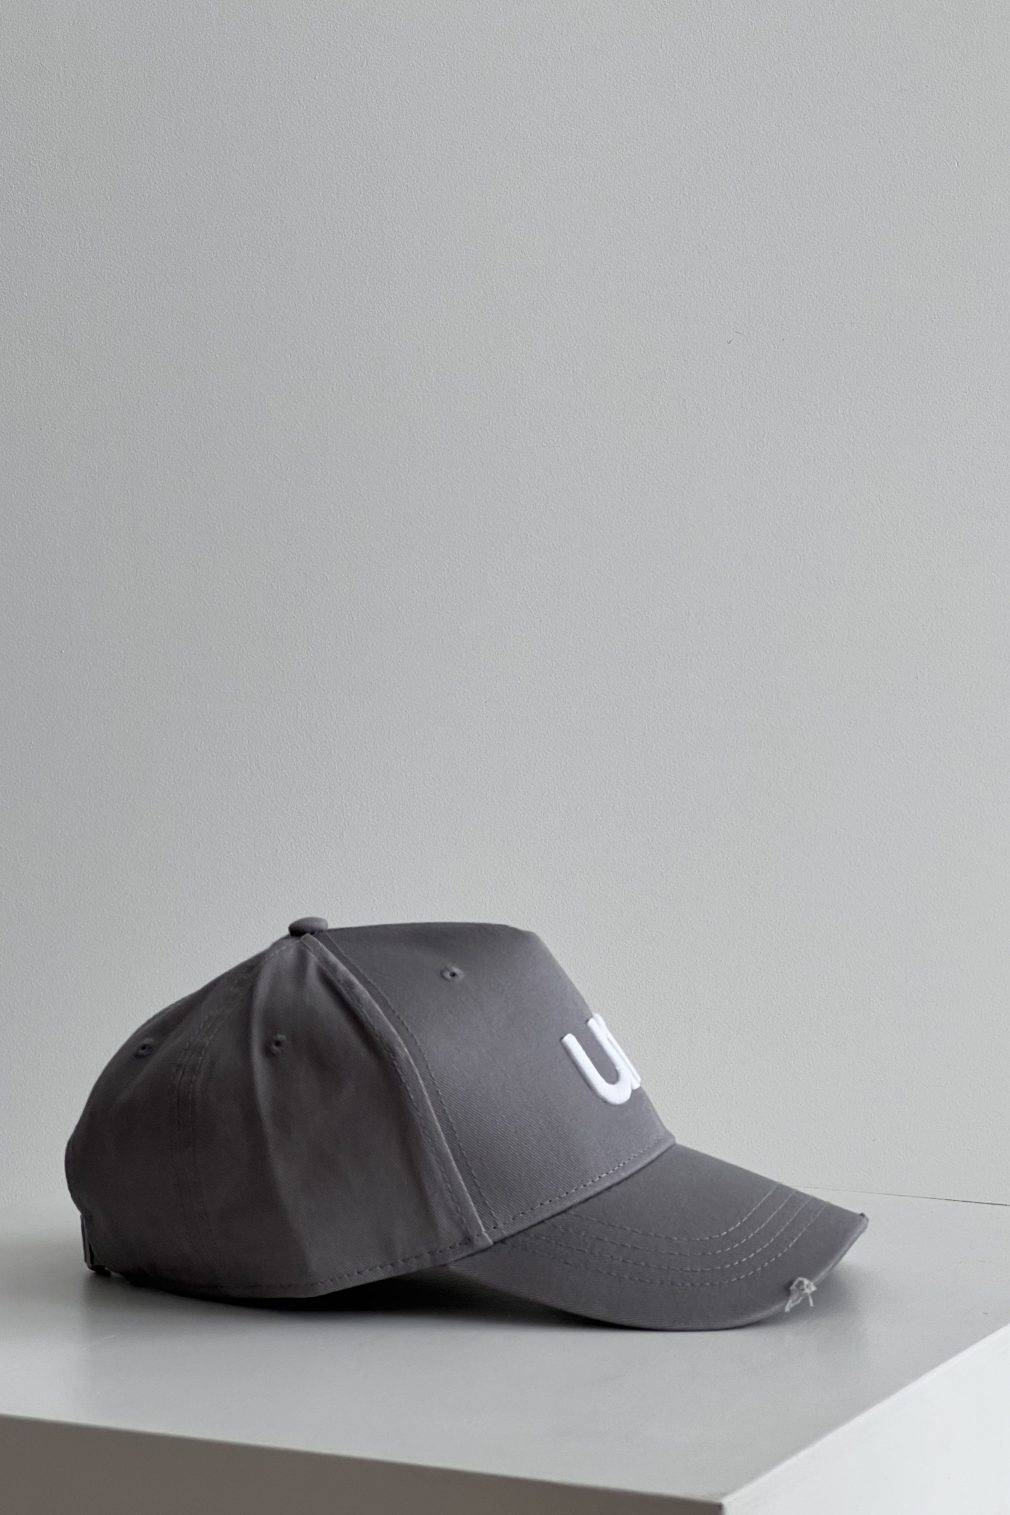 grey cap with white  logo "un" | unlabel